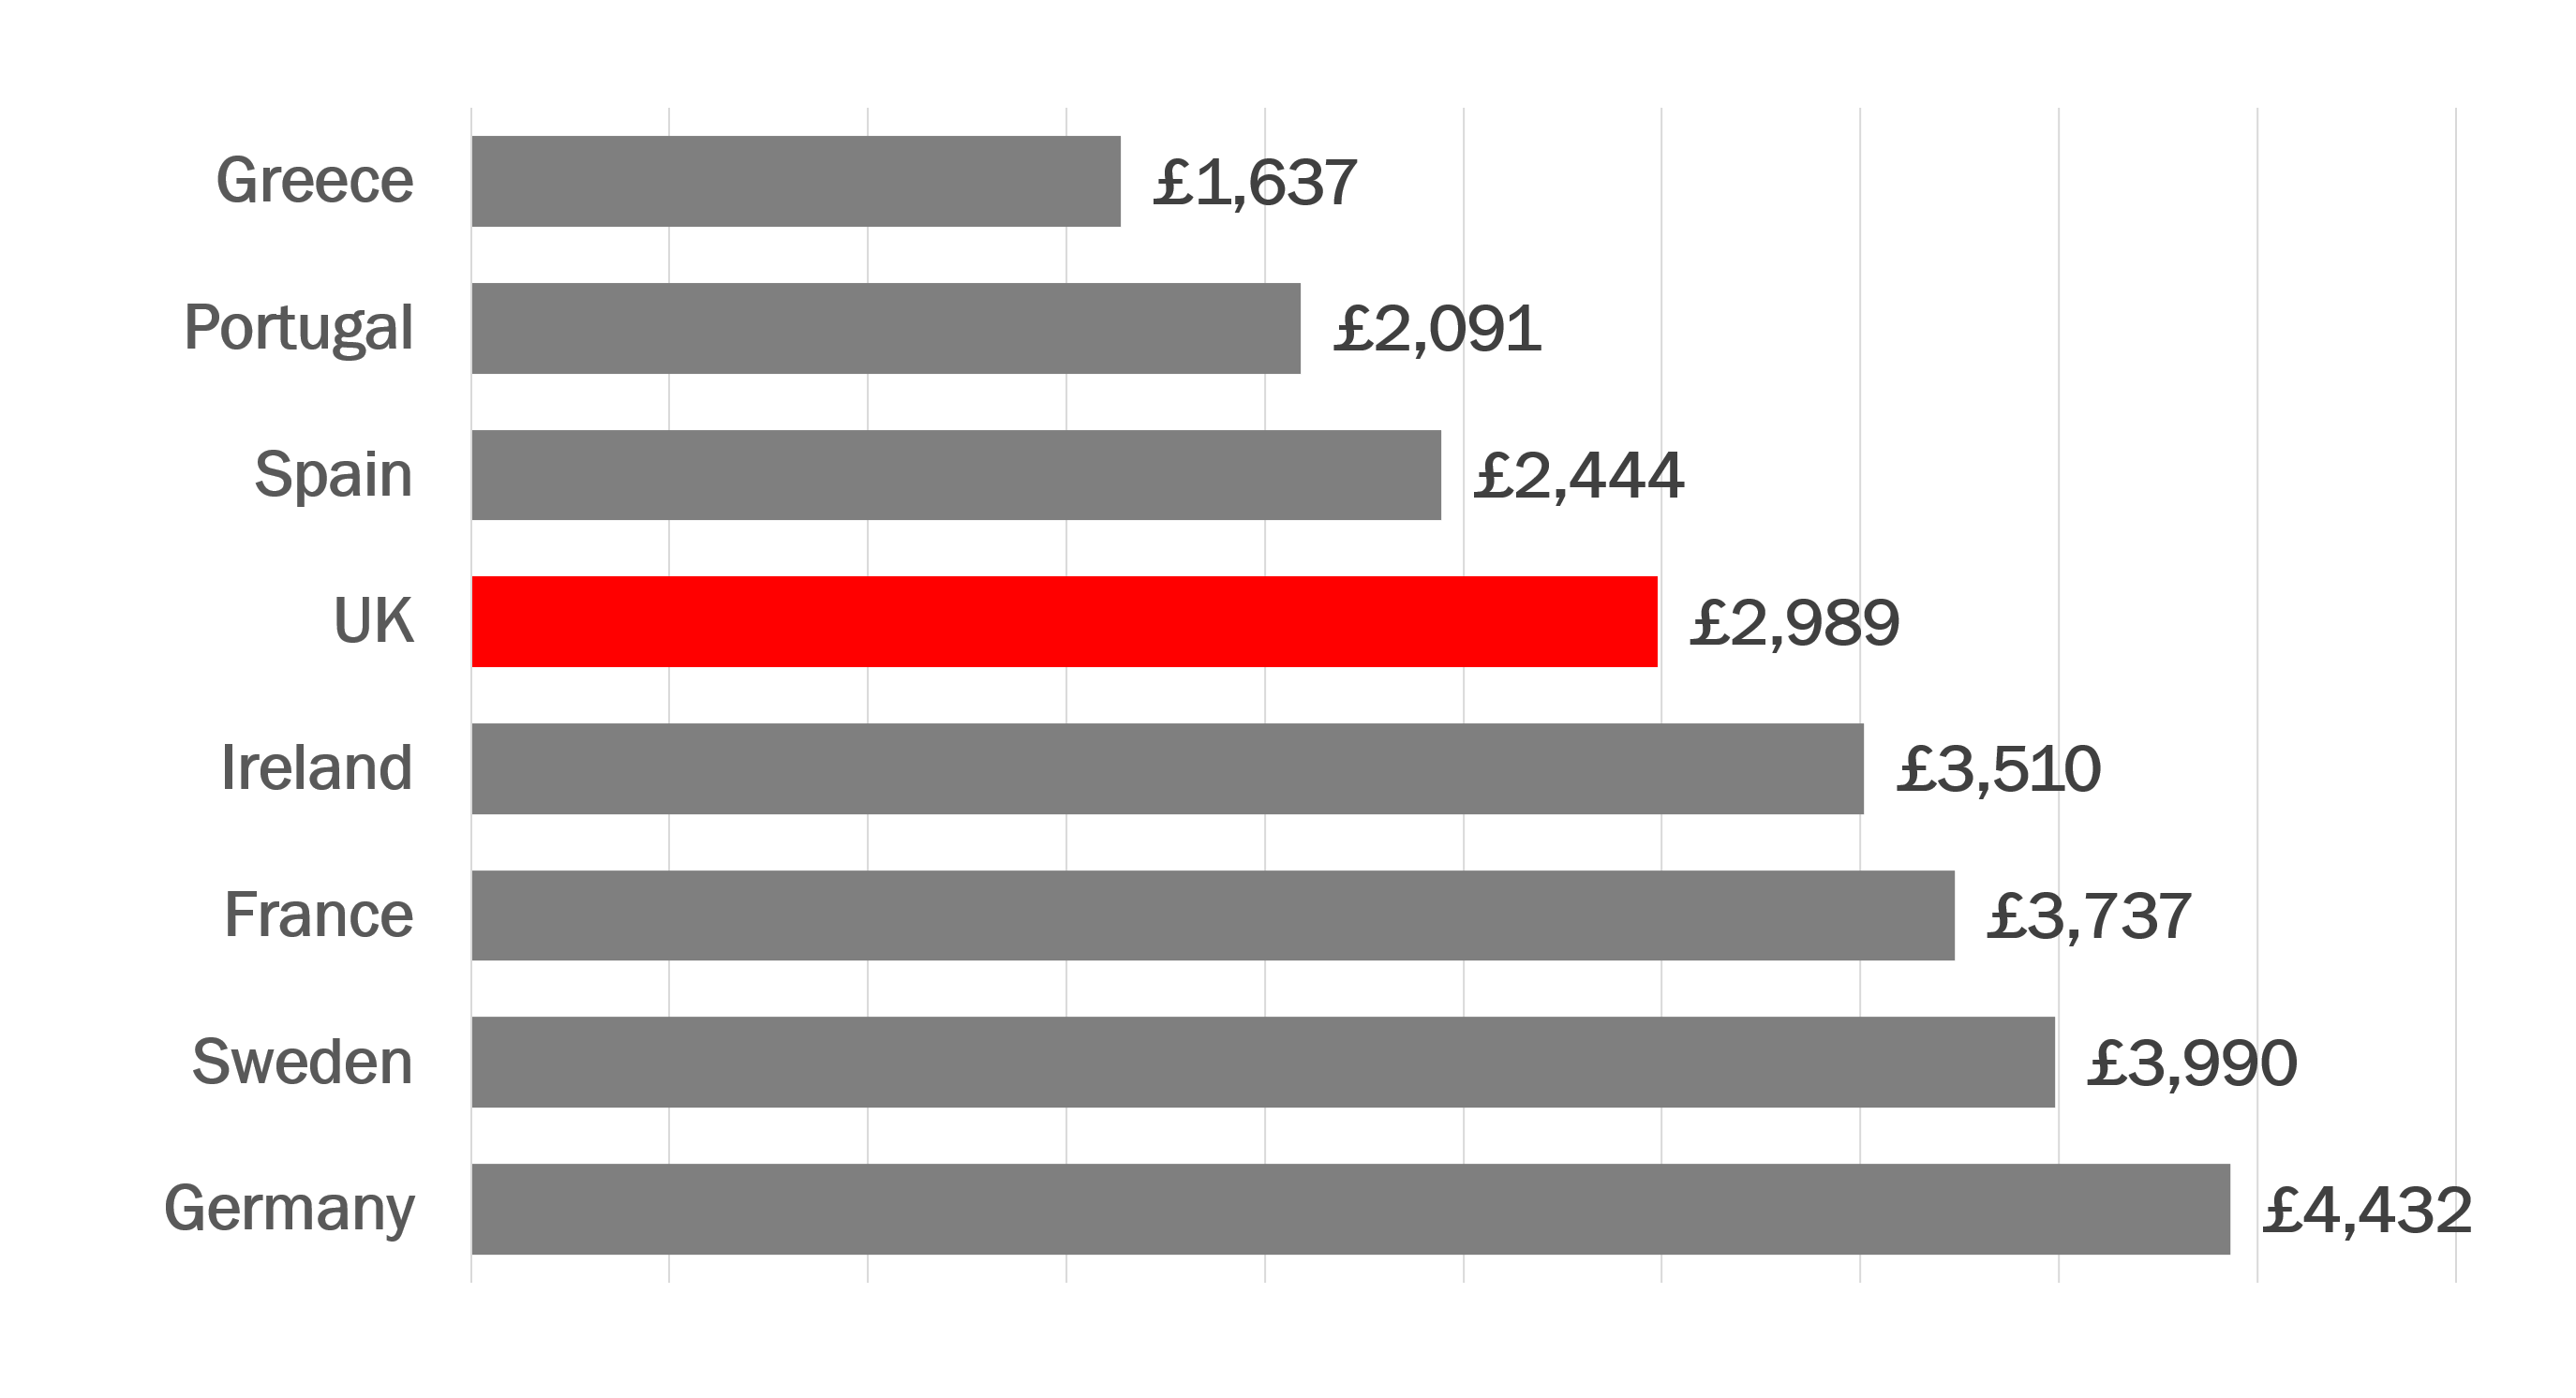 Health spending per head: Greece £1637, Portugal £2091, Spain £2444, UK £2989, Ireland £3510, France £3737, Sweden £3990, Germany £4432